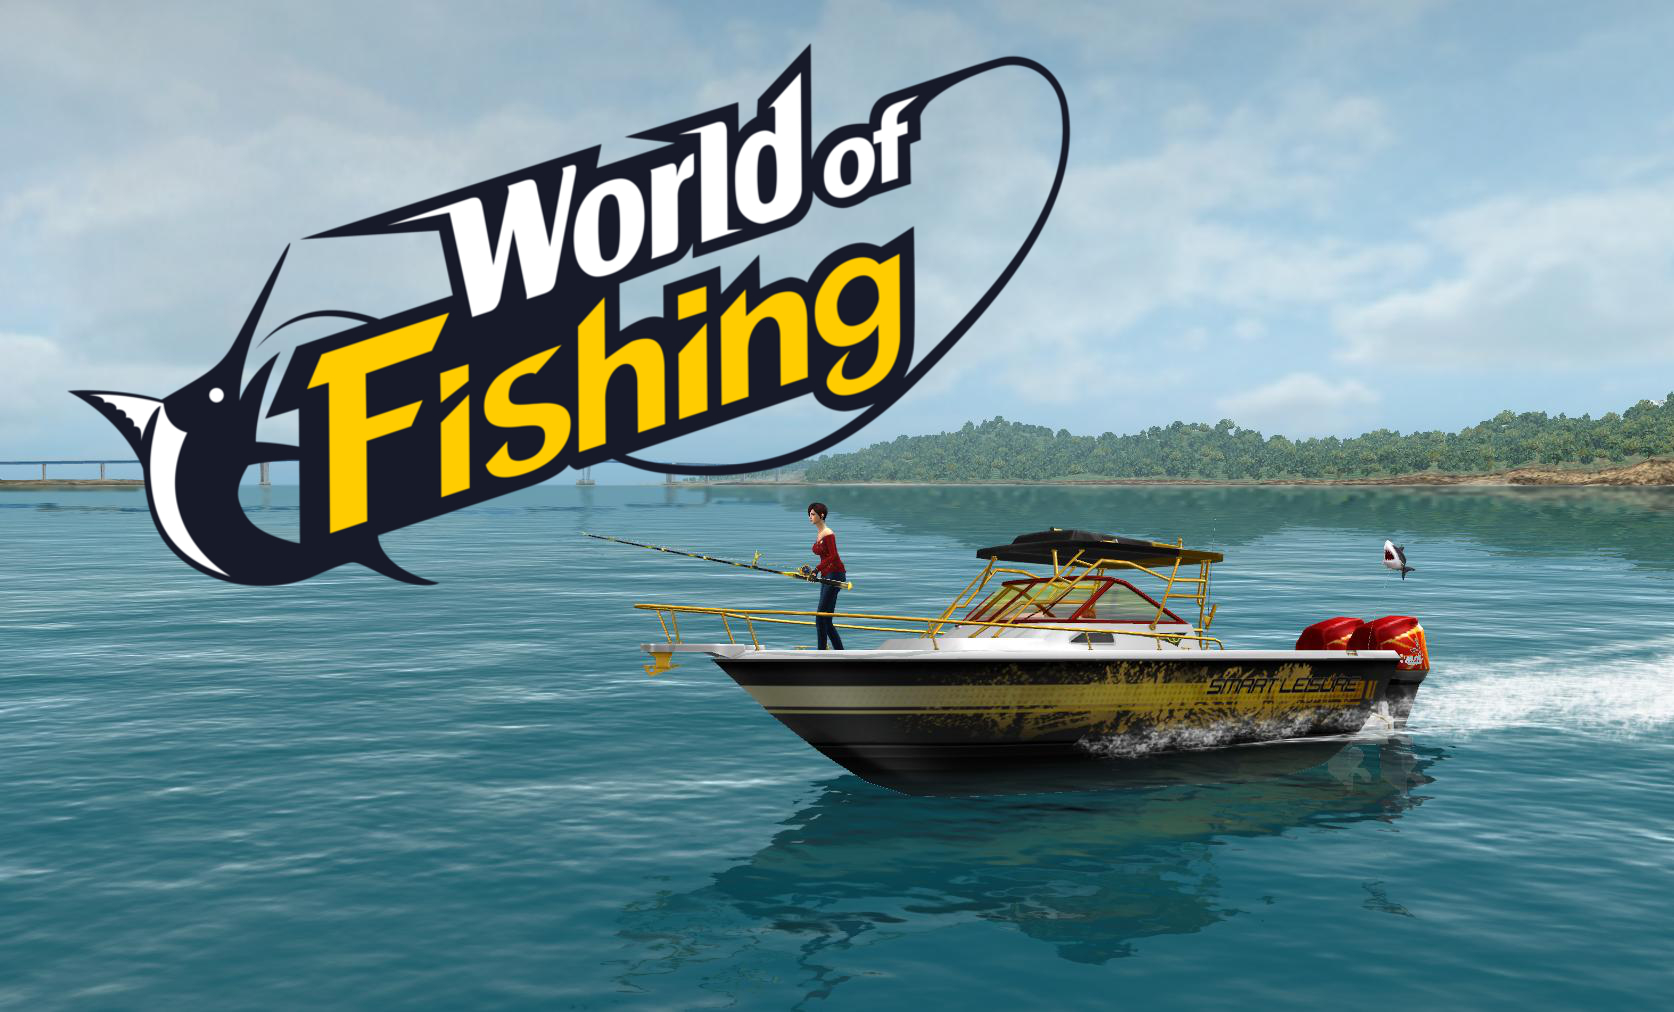 Exquisite fishing game. Игра рыбалка. Big game Fishing. Фишинг ворлд. World of Fishing.